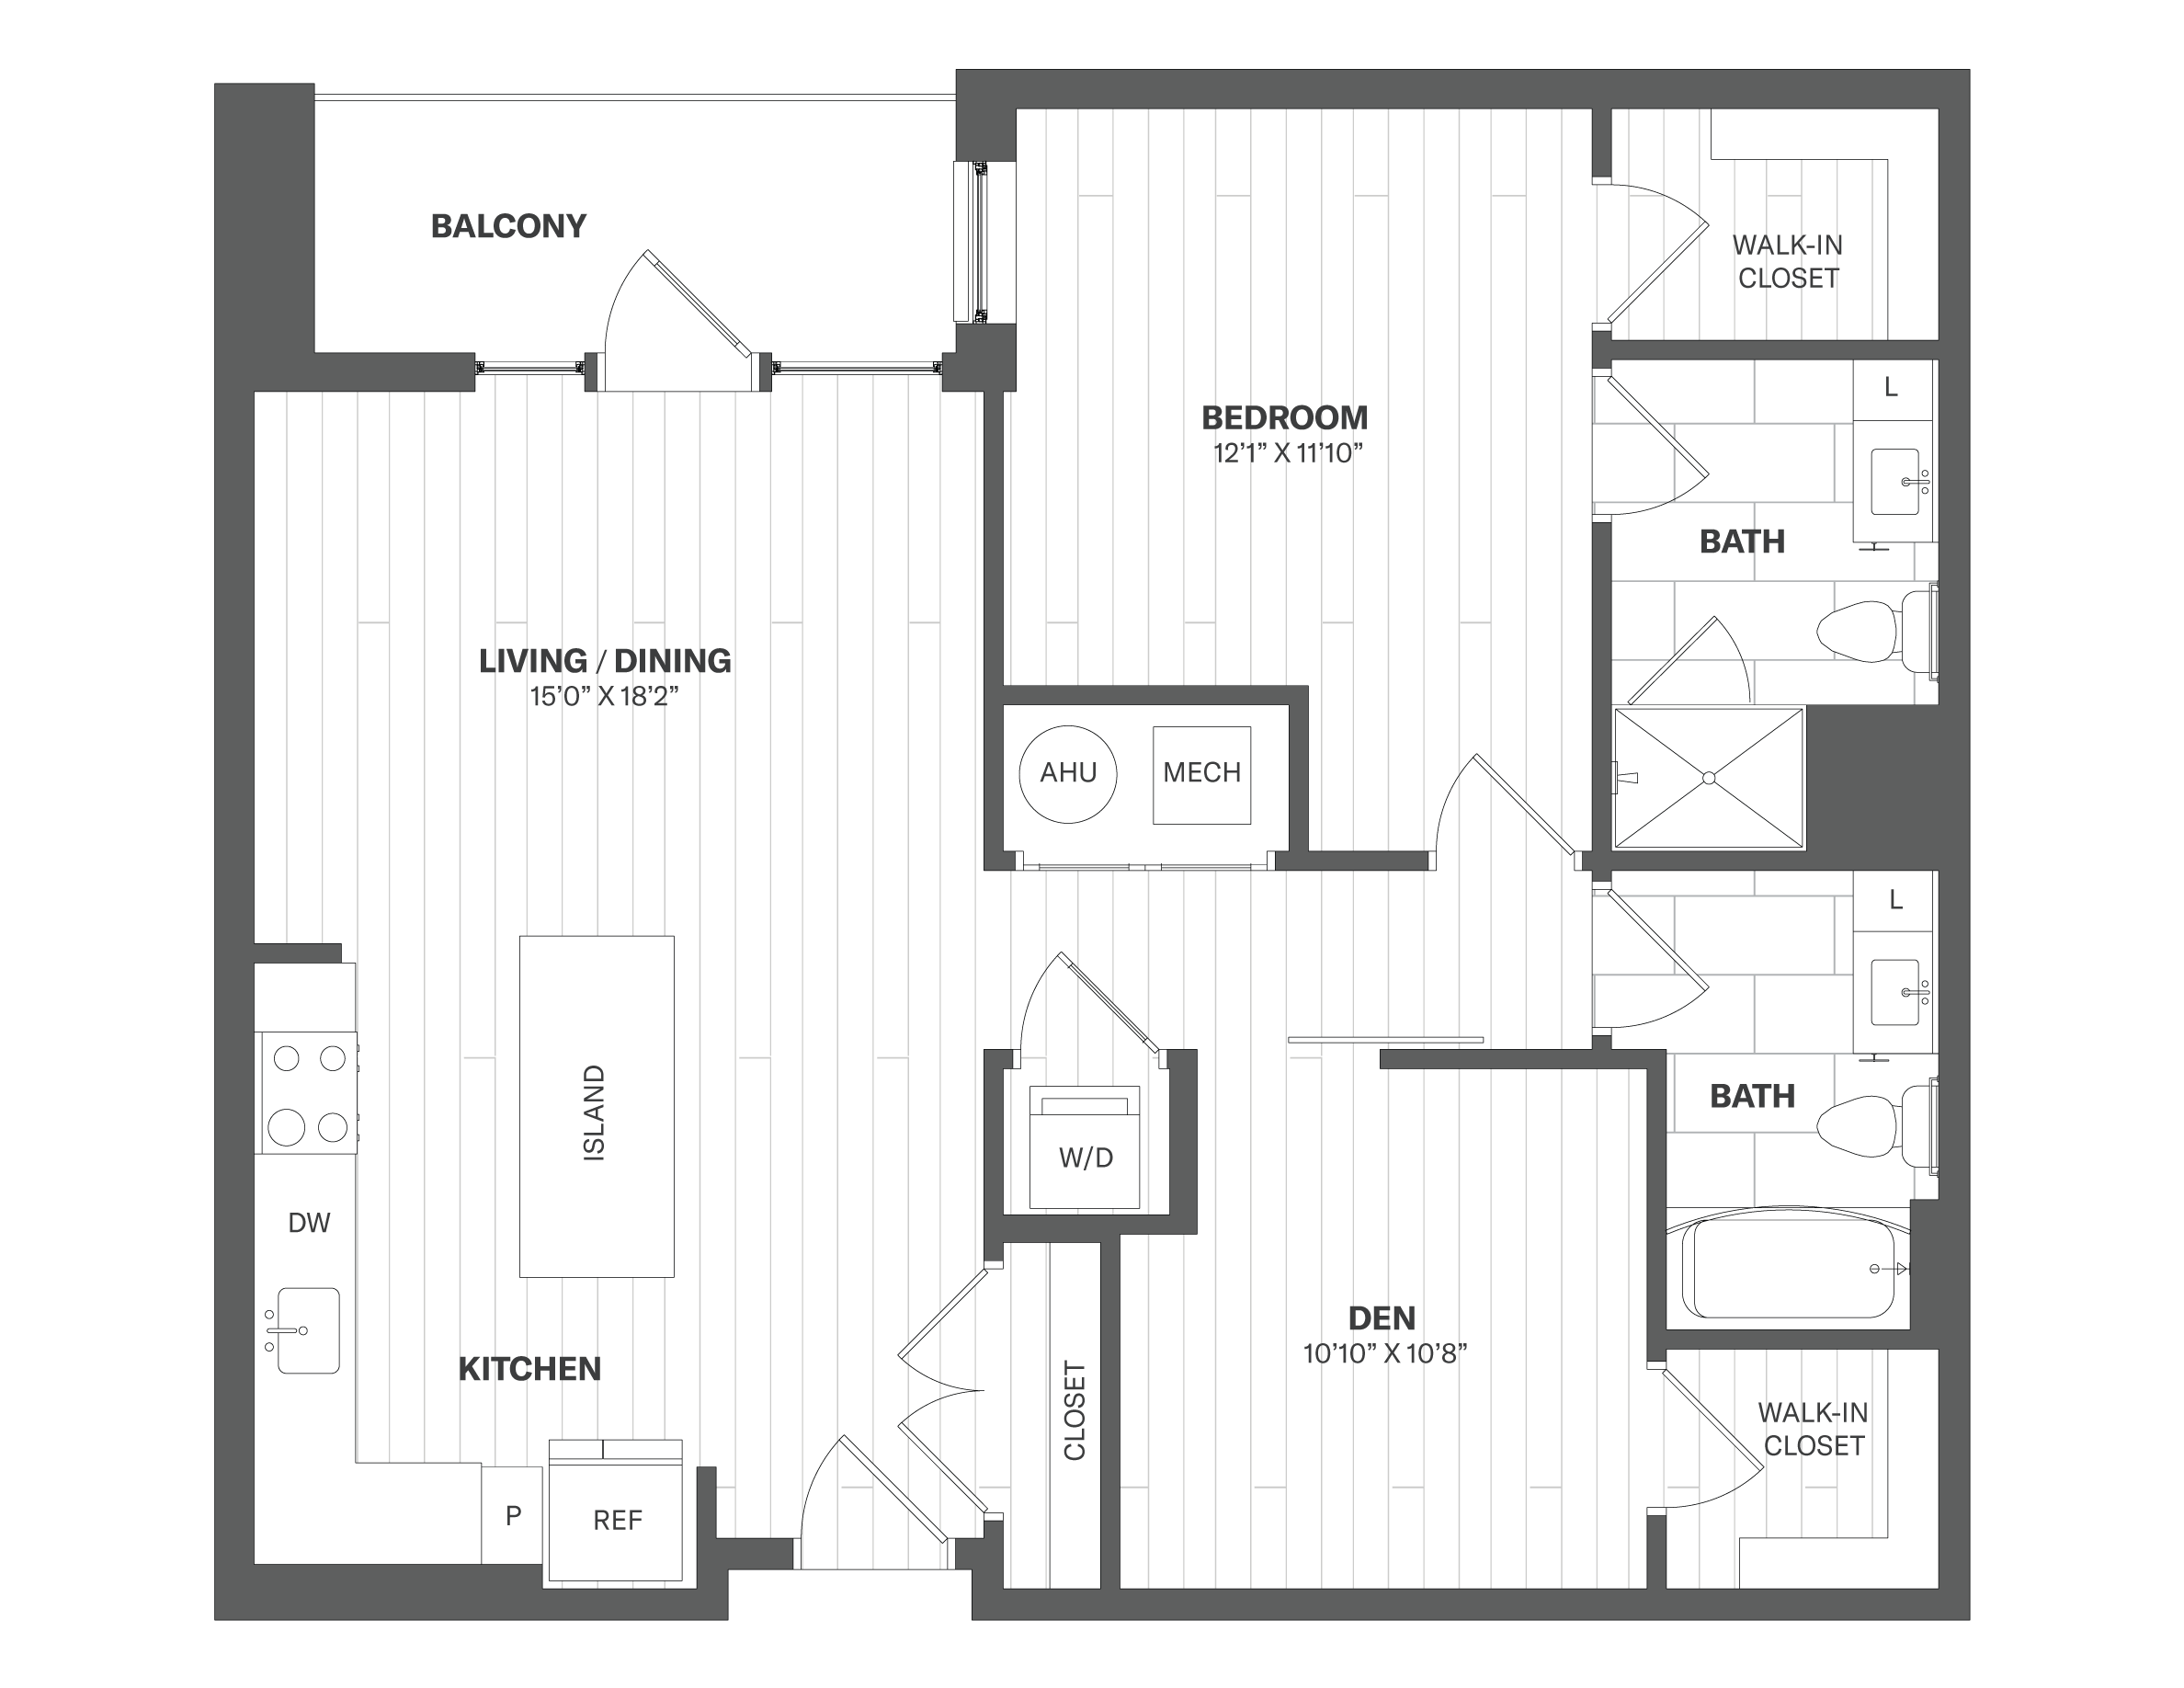 Apartment 530 floorplan